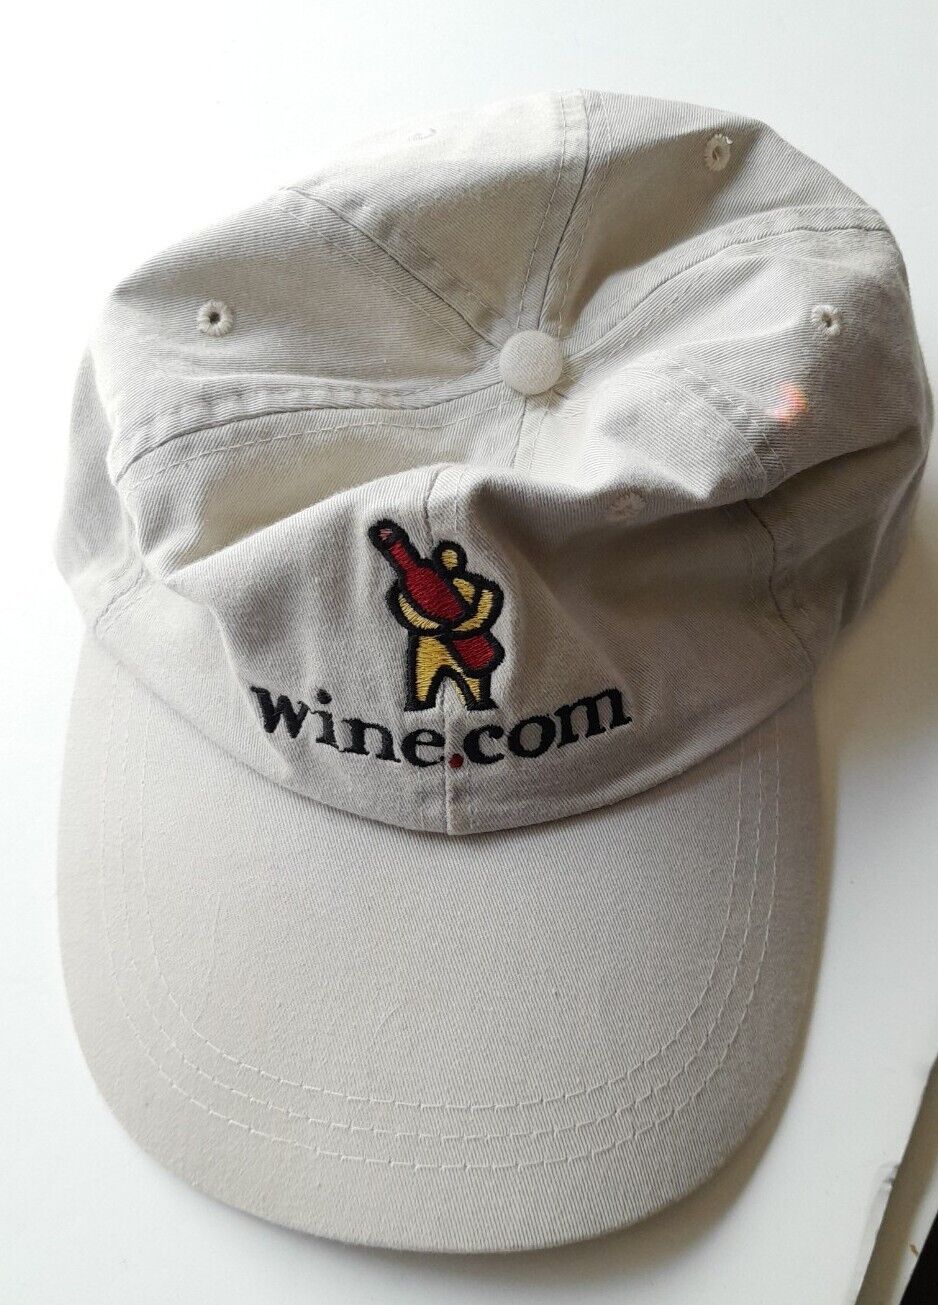 wine.com FAHRENHEIT Ballcap Dot Com Hat 90s Y2k Silicon Valley beige red bottle